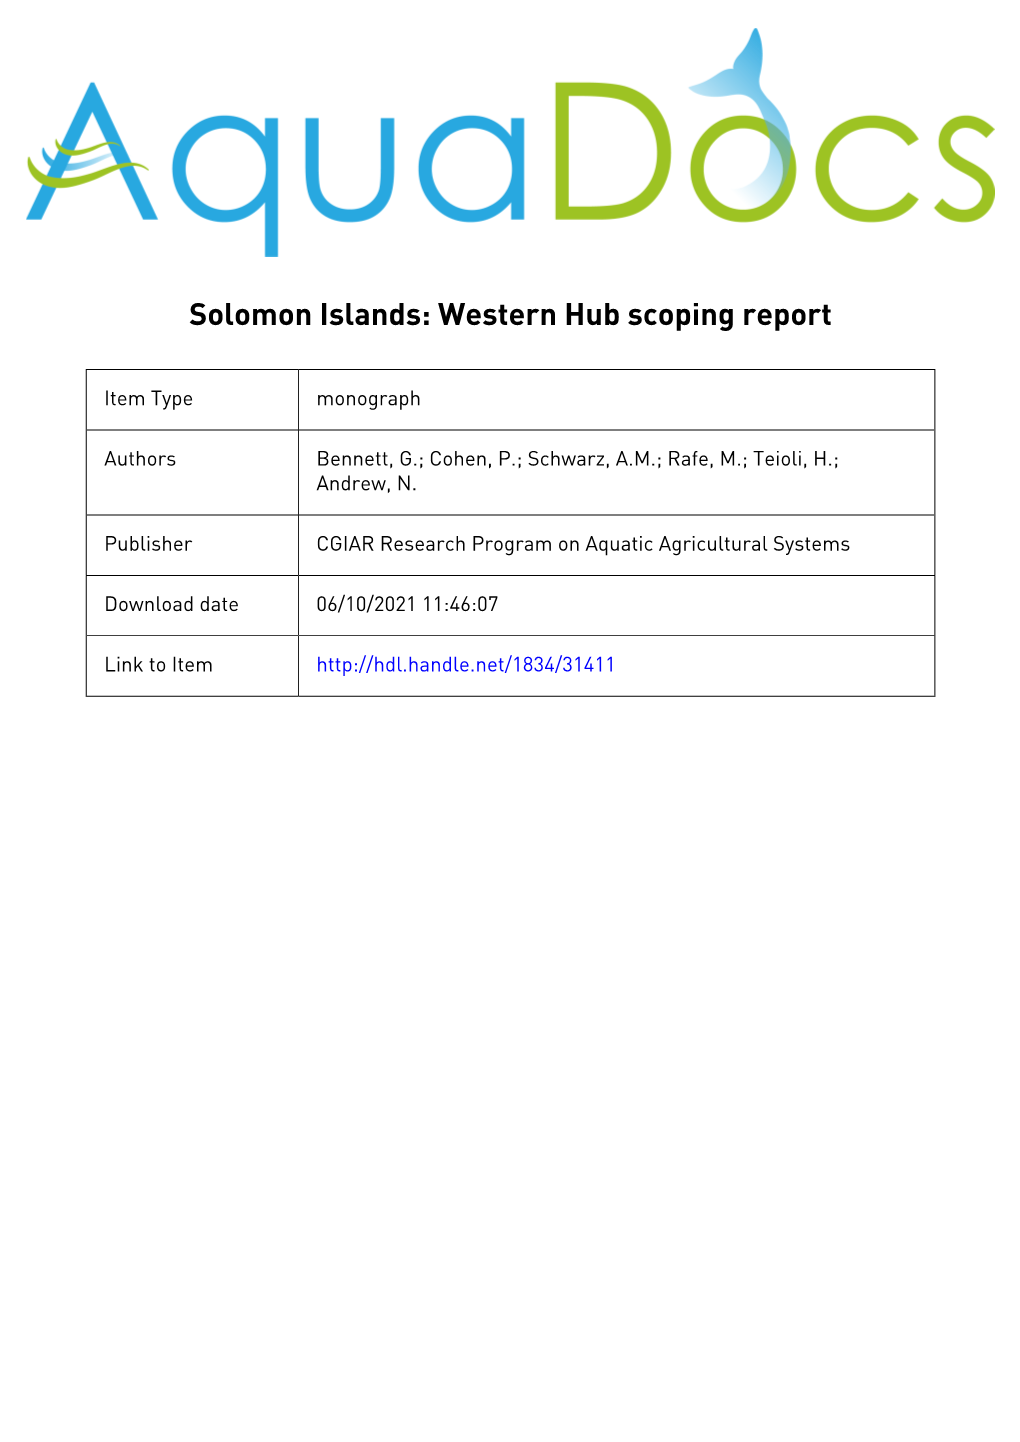 Solomon Islands: Western Hub Scoping Report